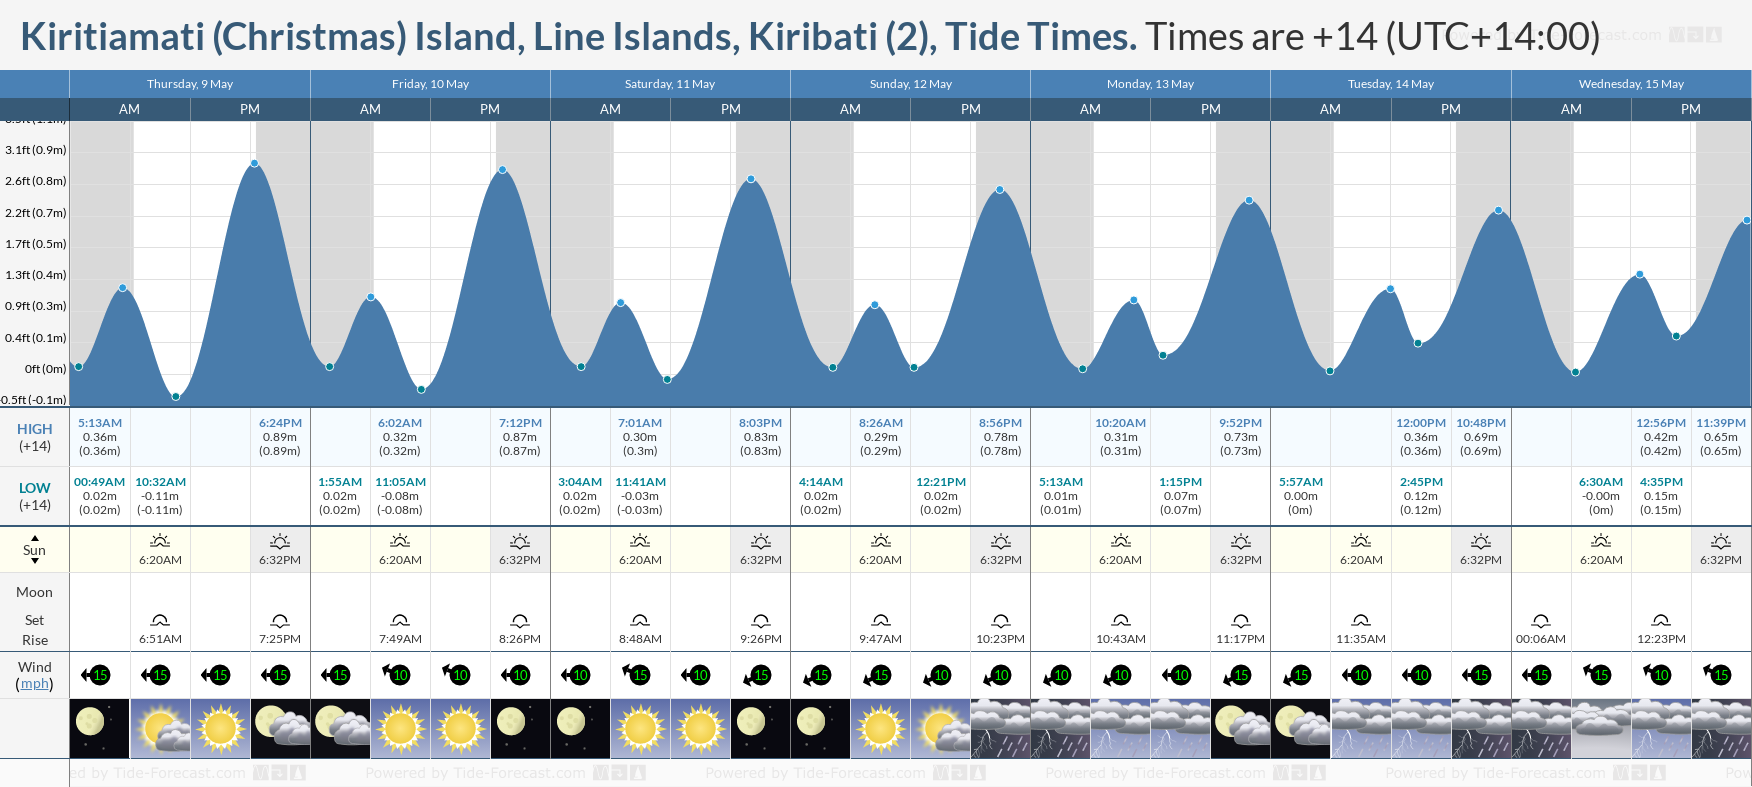 Kiritiamati (Christmas) Island, Line Islands, Kiribati (2) Tide Chart including high and low tide tide times for the next 7 days